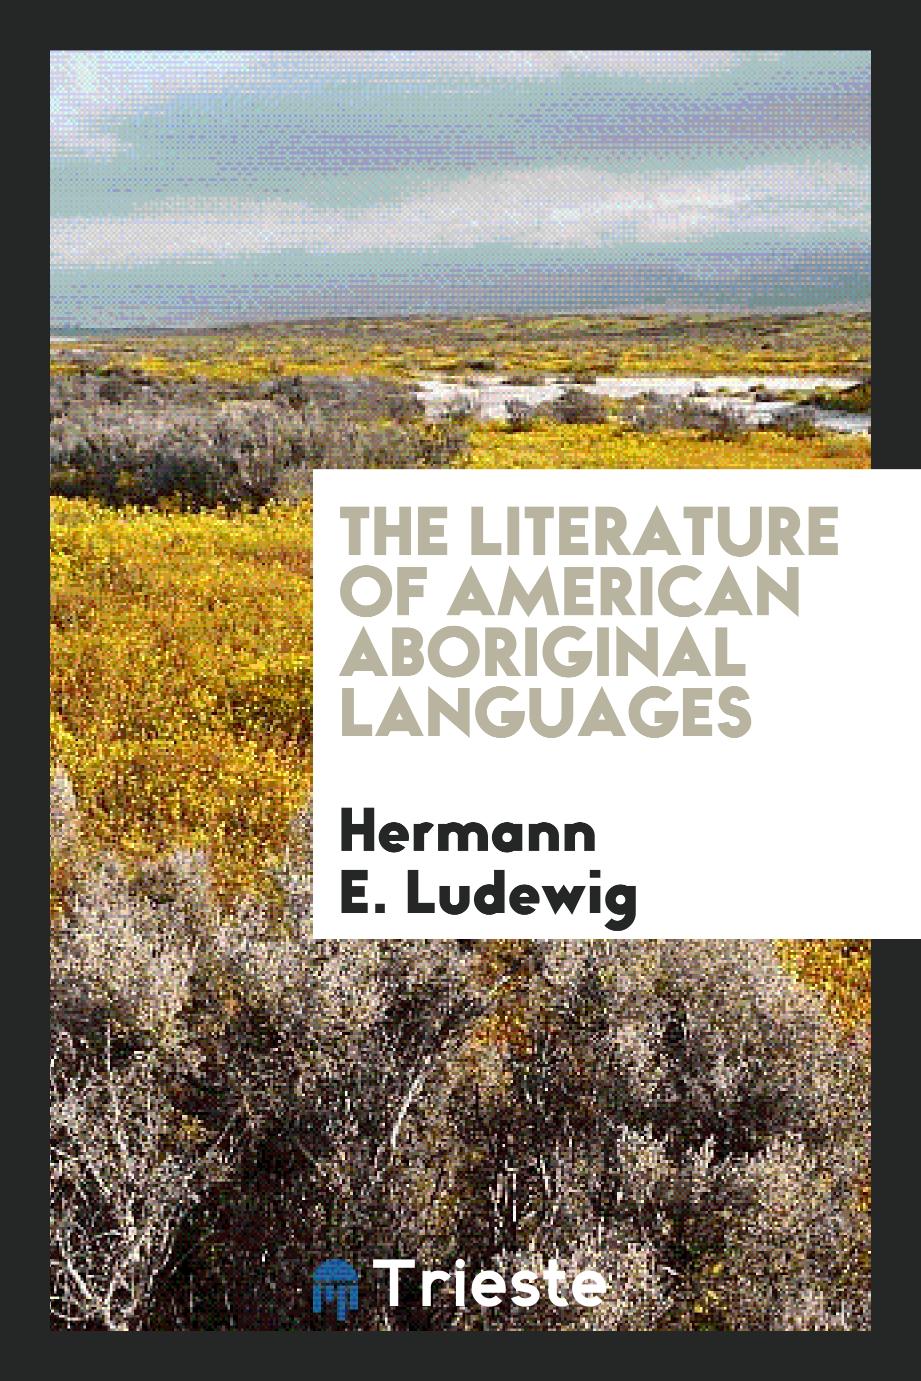 The literature of American aboriginal languages - Hermann E. Ludewig